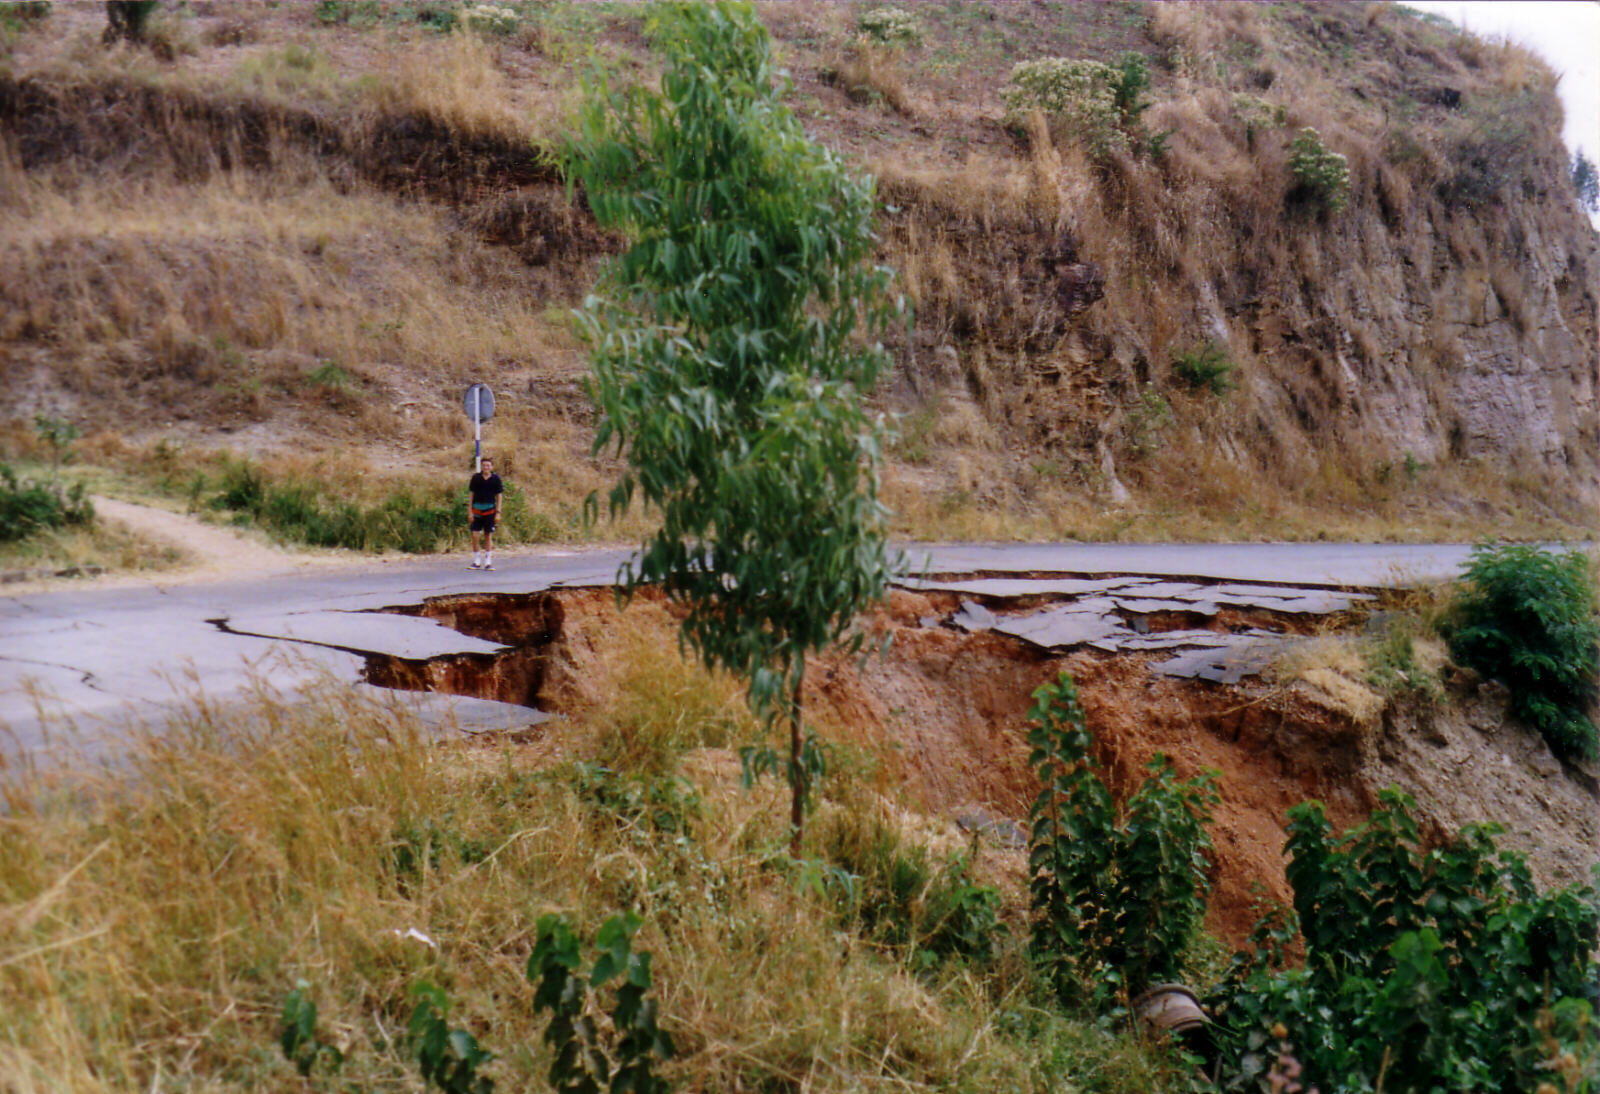 A collapsed road in Burundi